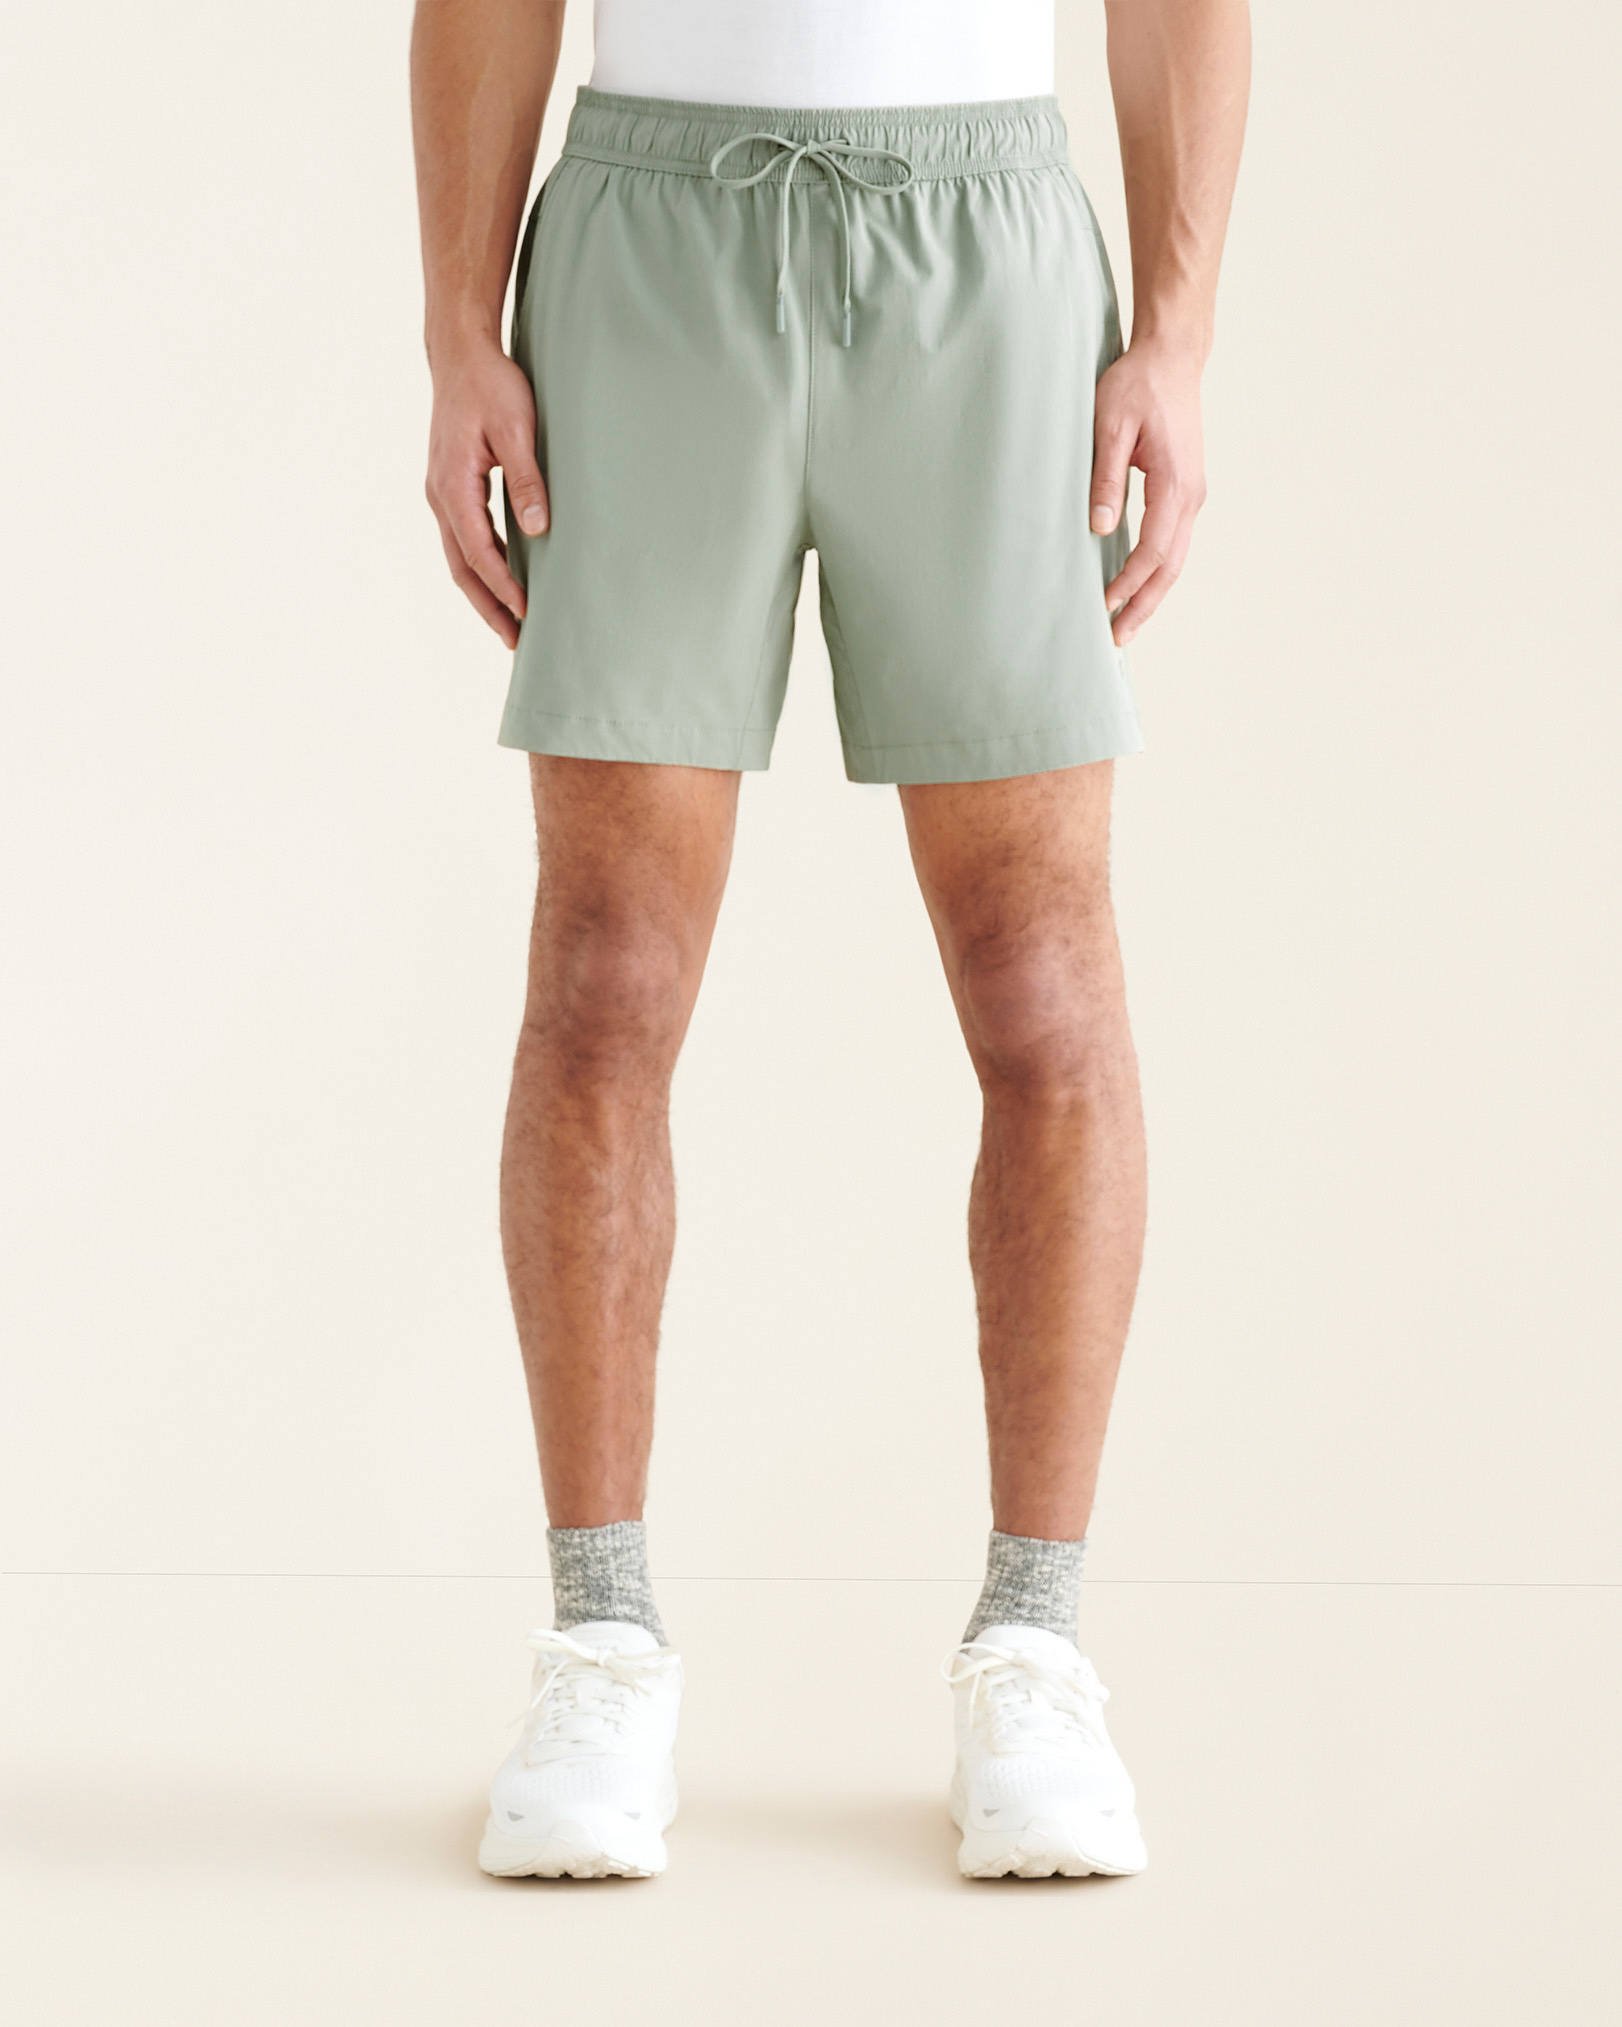 Comfortable Shorts For Men